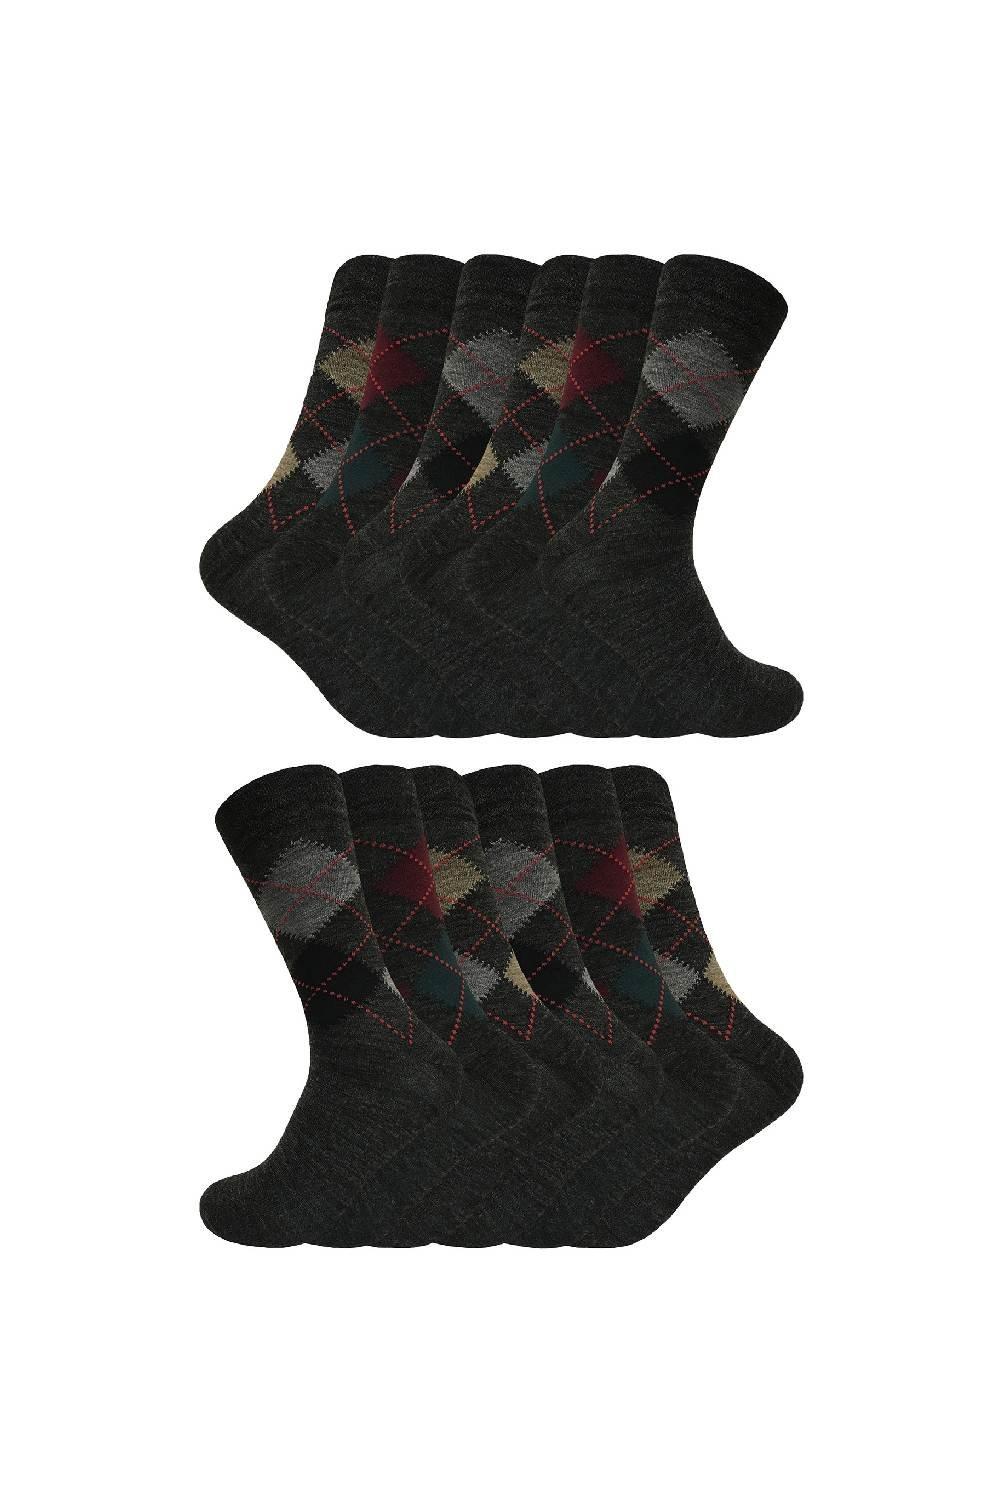 12 Pair Multipack Lambswool Socks - Thin and Soft Honeycomb Top Socks